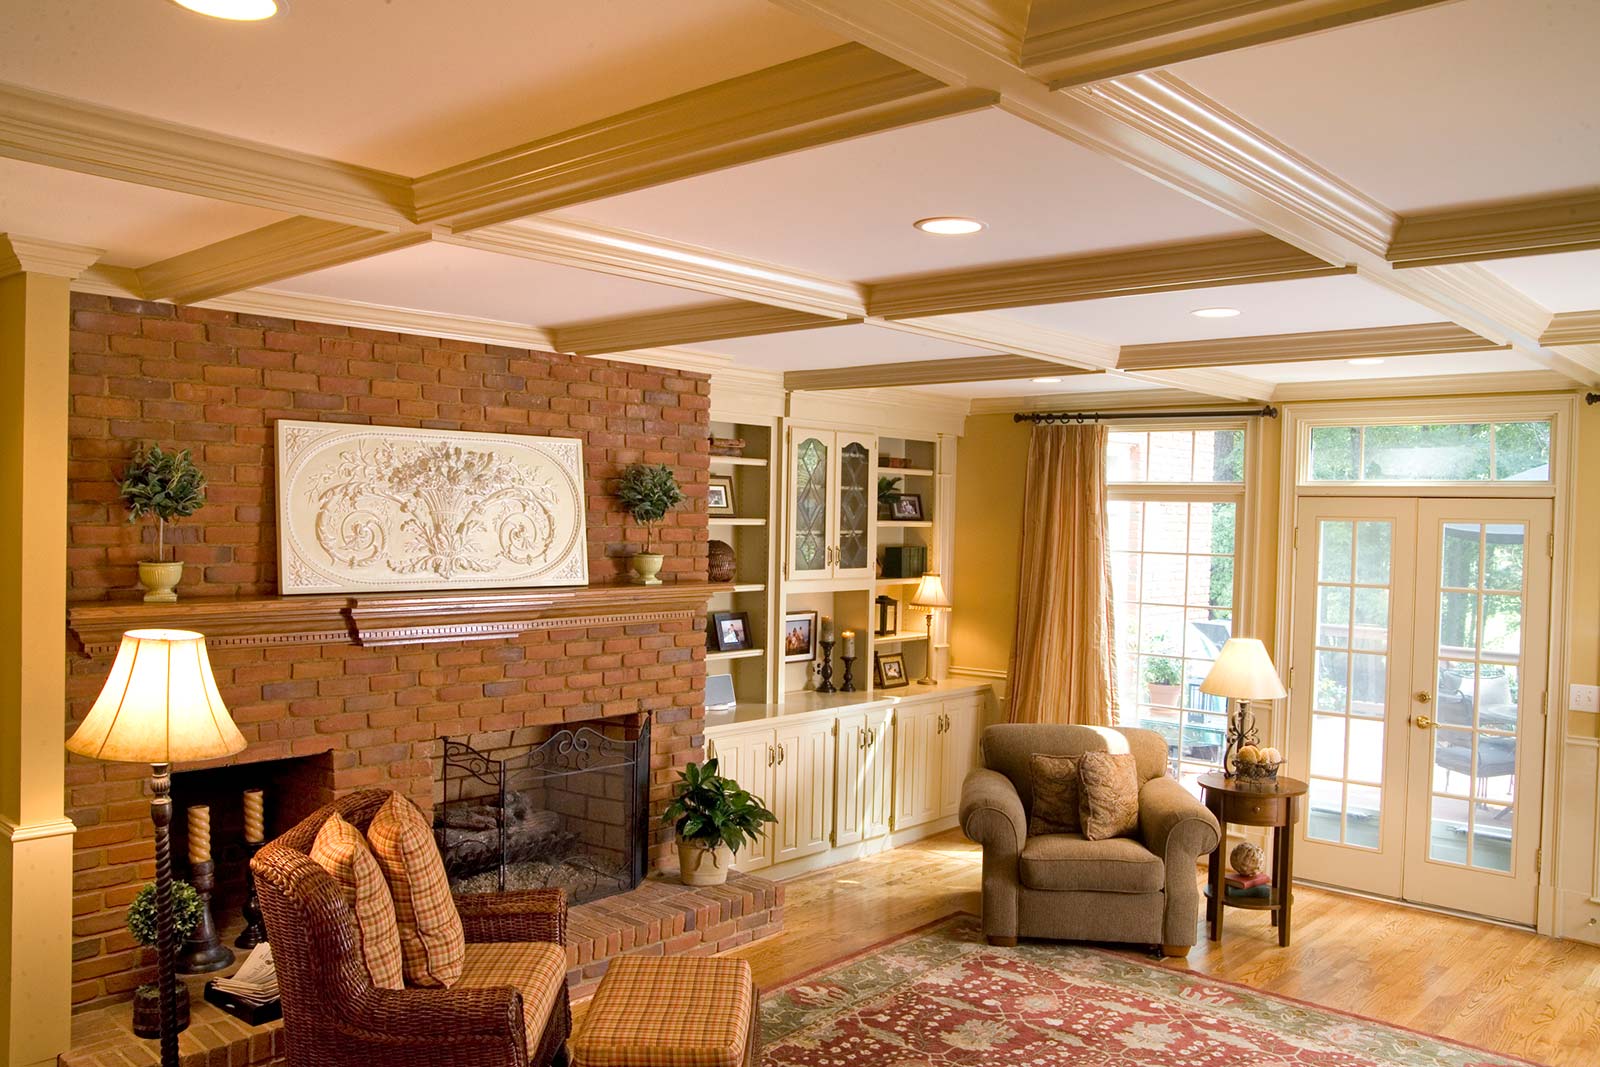 Deep cofferecd ceiling in living room remodel